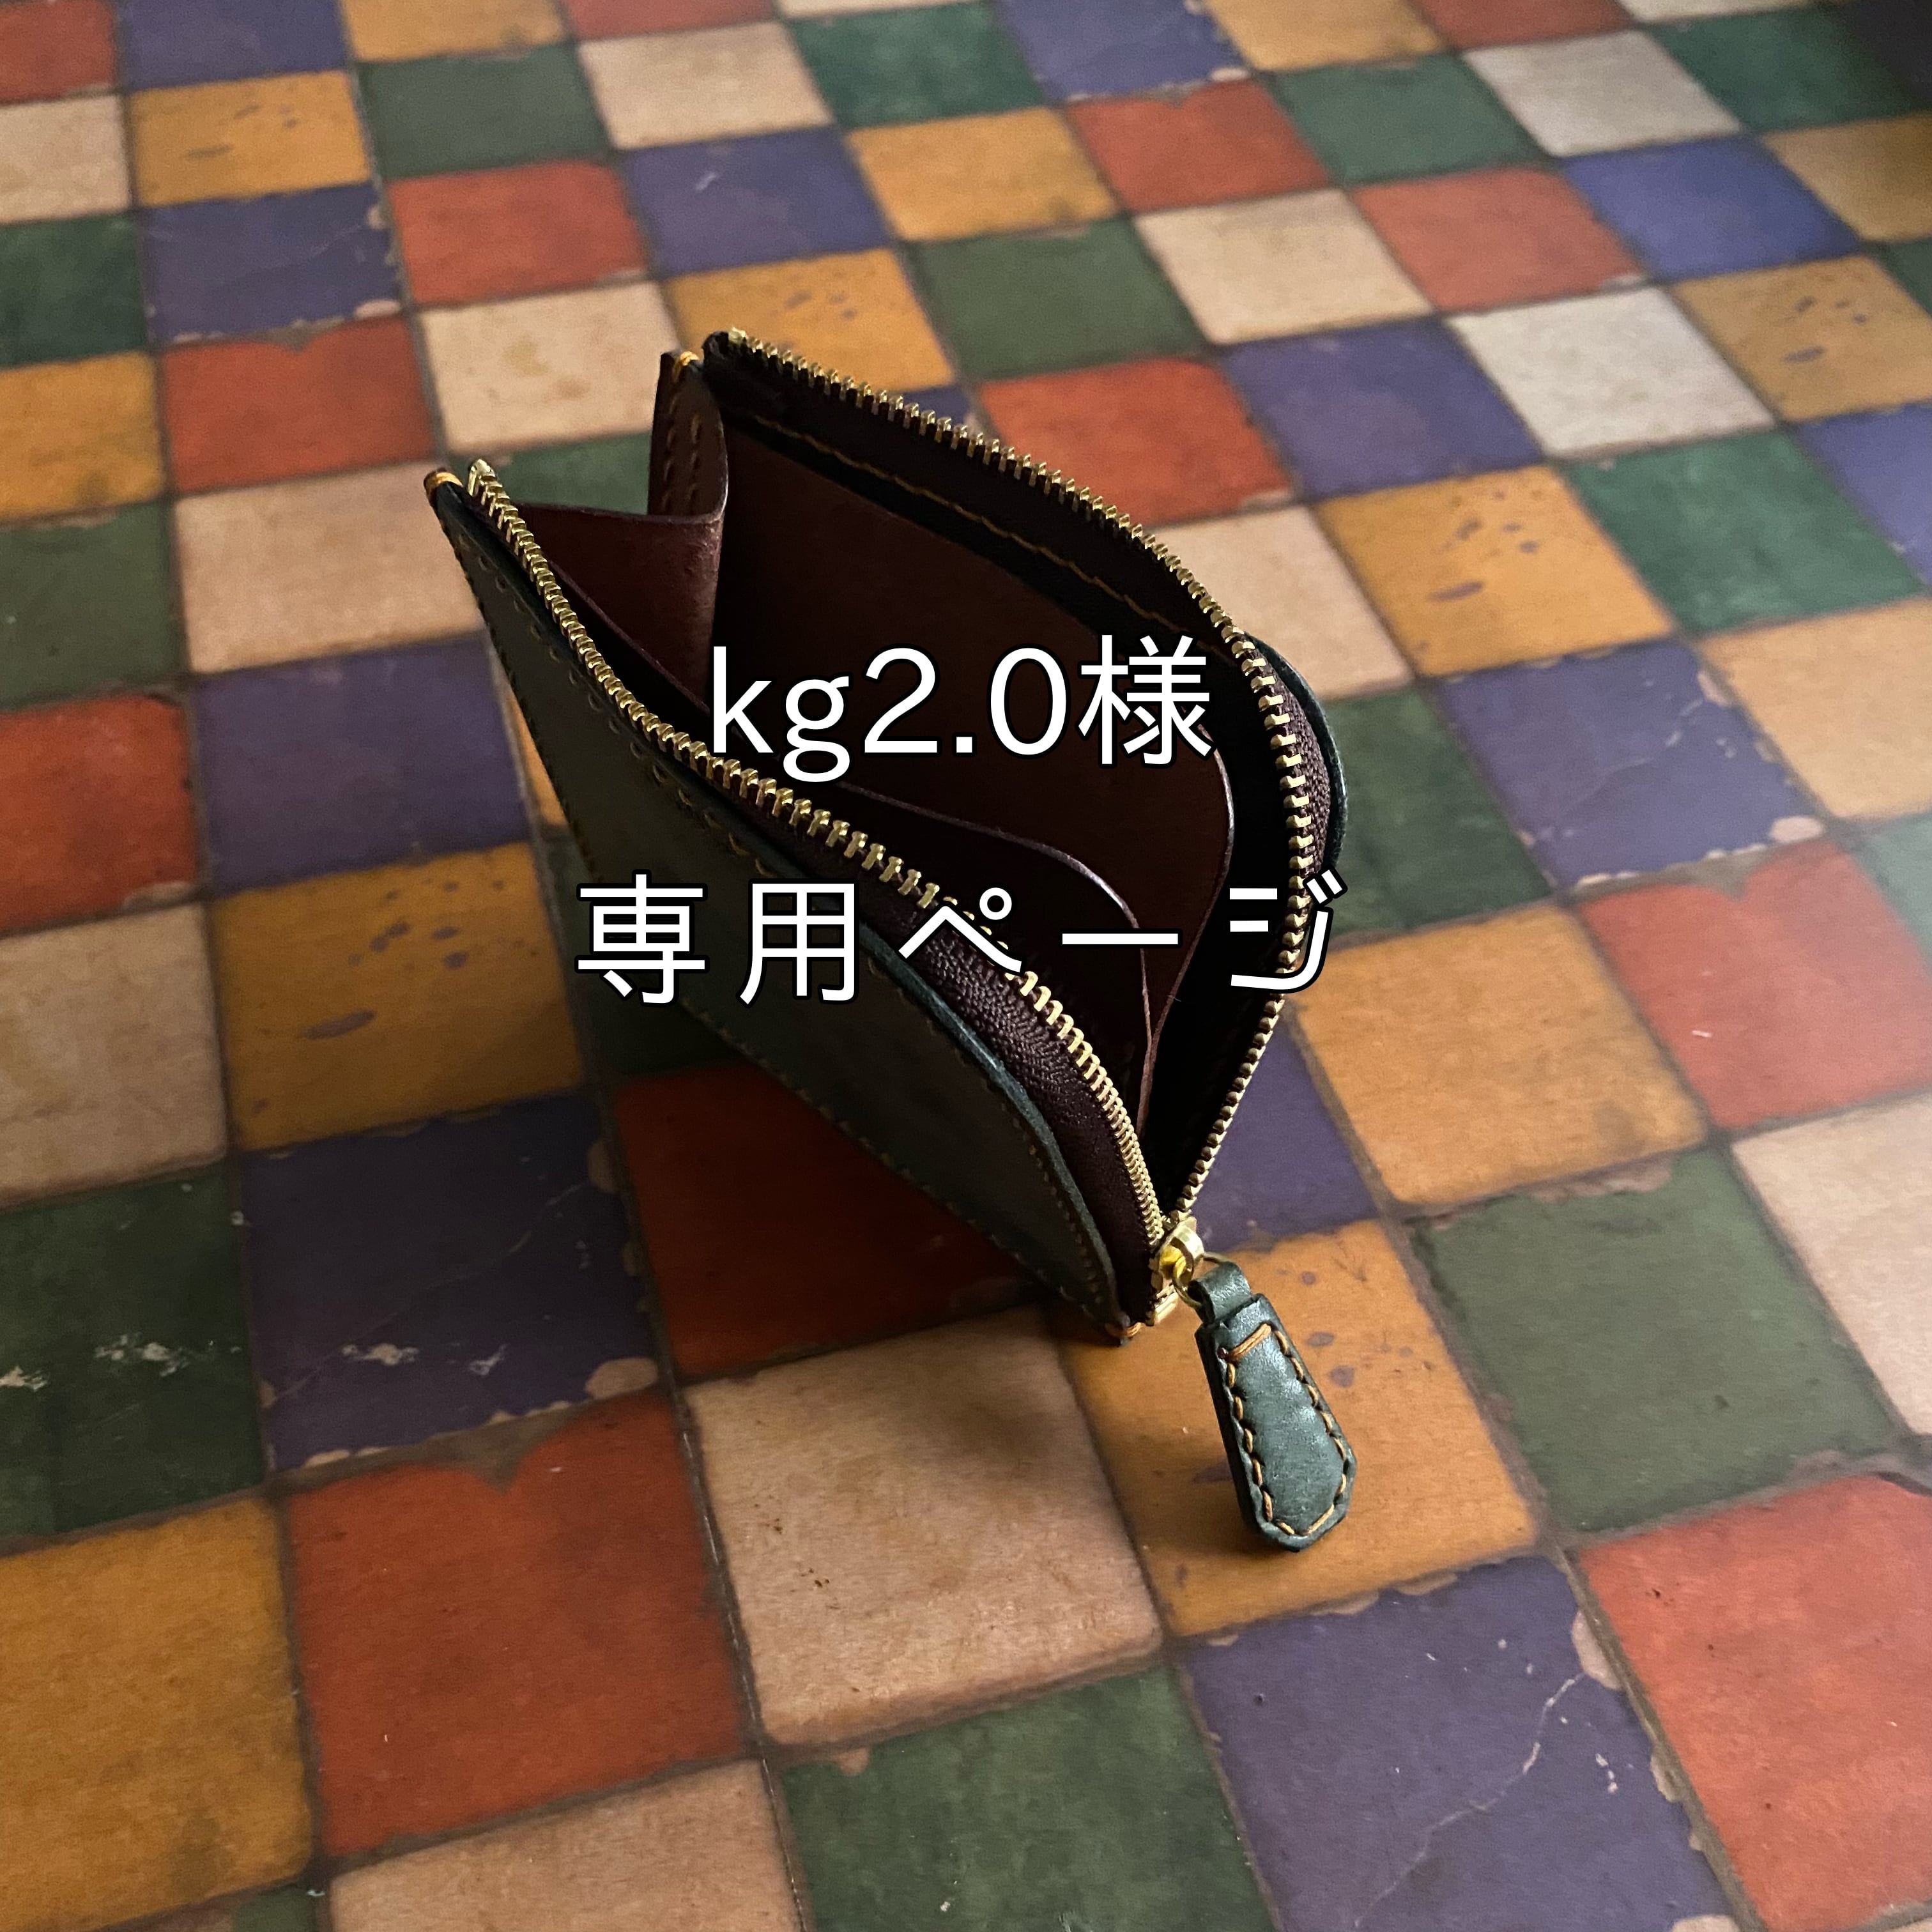 kg2.0様 専用ページ | KiiRo works